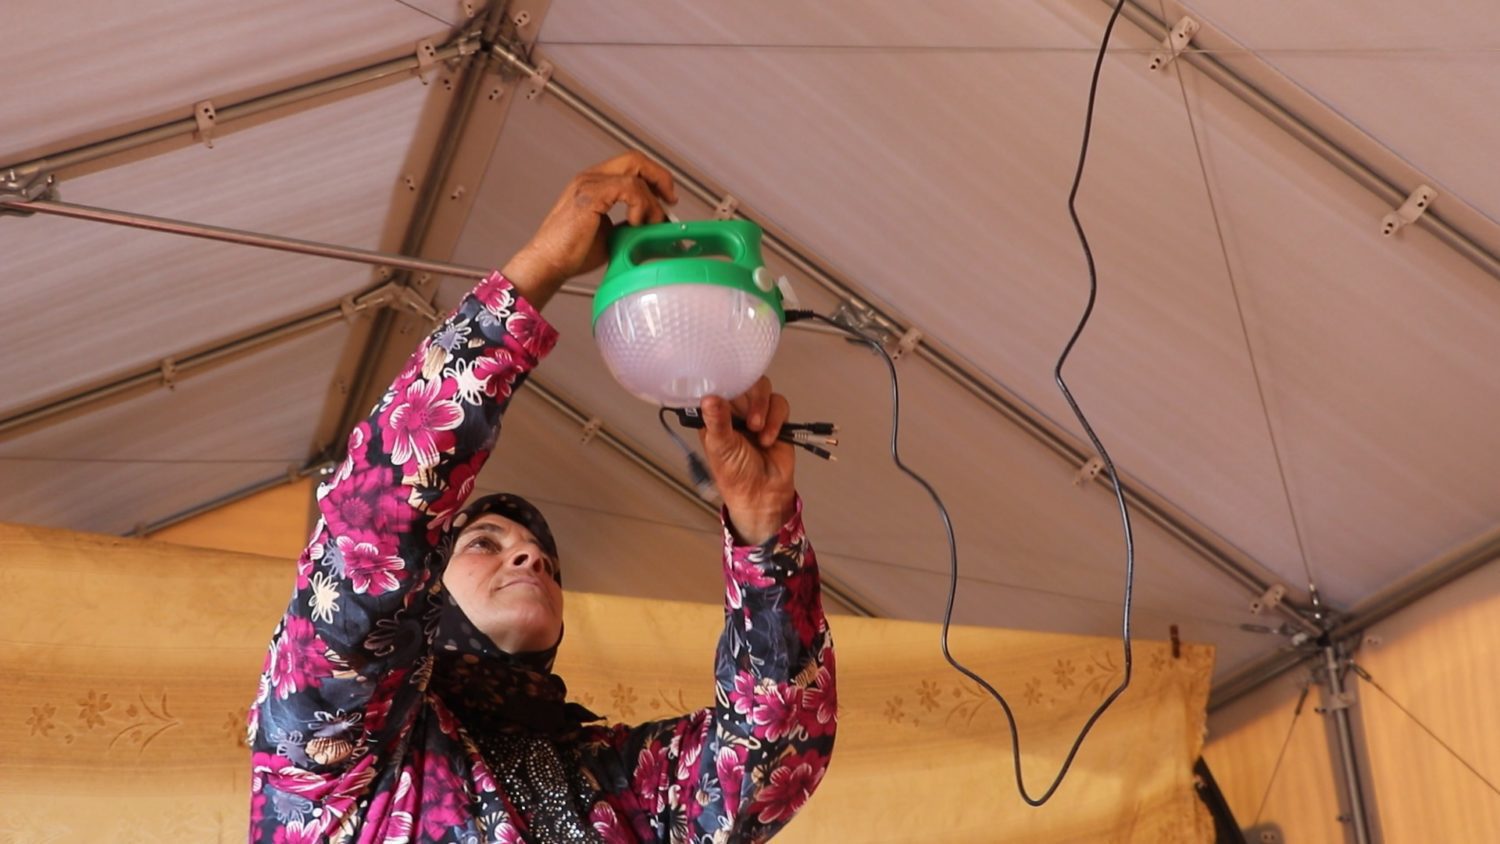 Providing transitional shelter in settlements across Syria